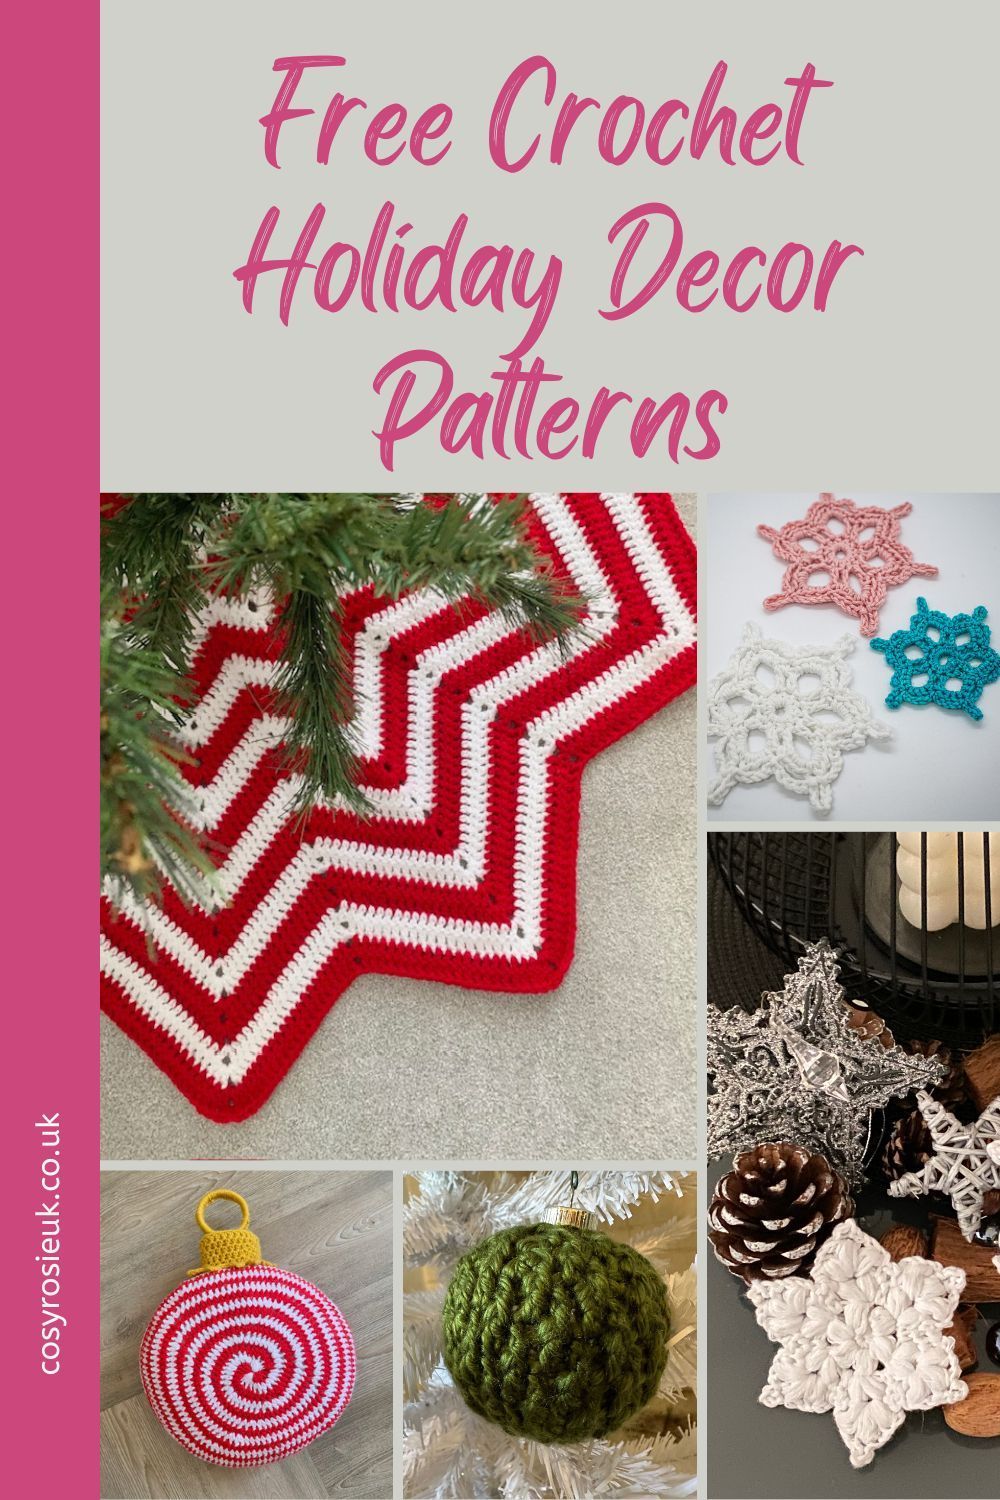 Free Crochet Holiday Decor Patterns Pin (2)